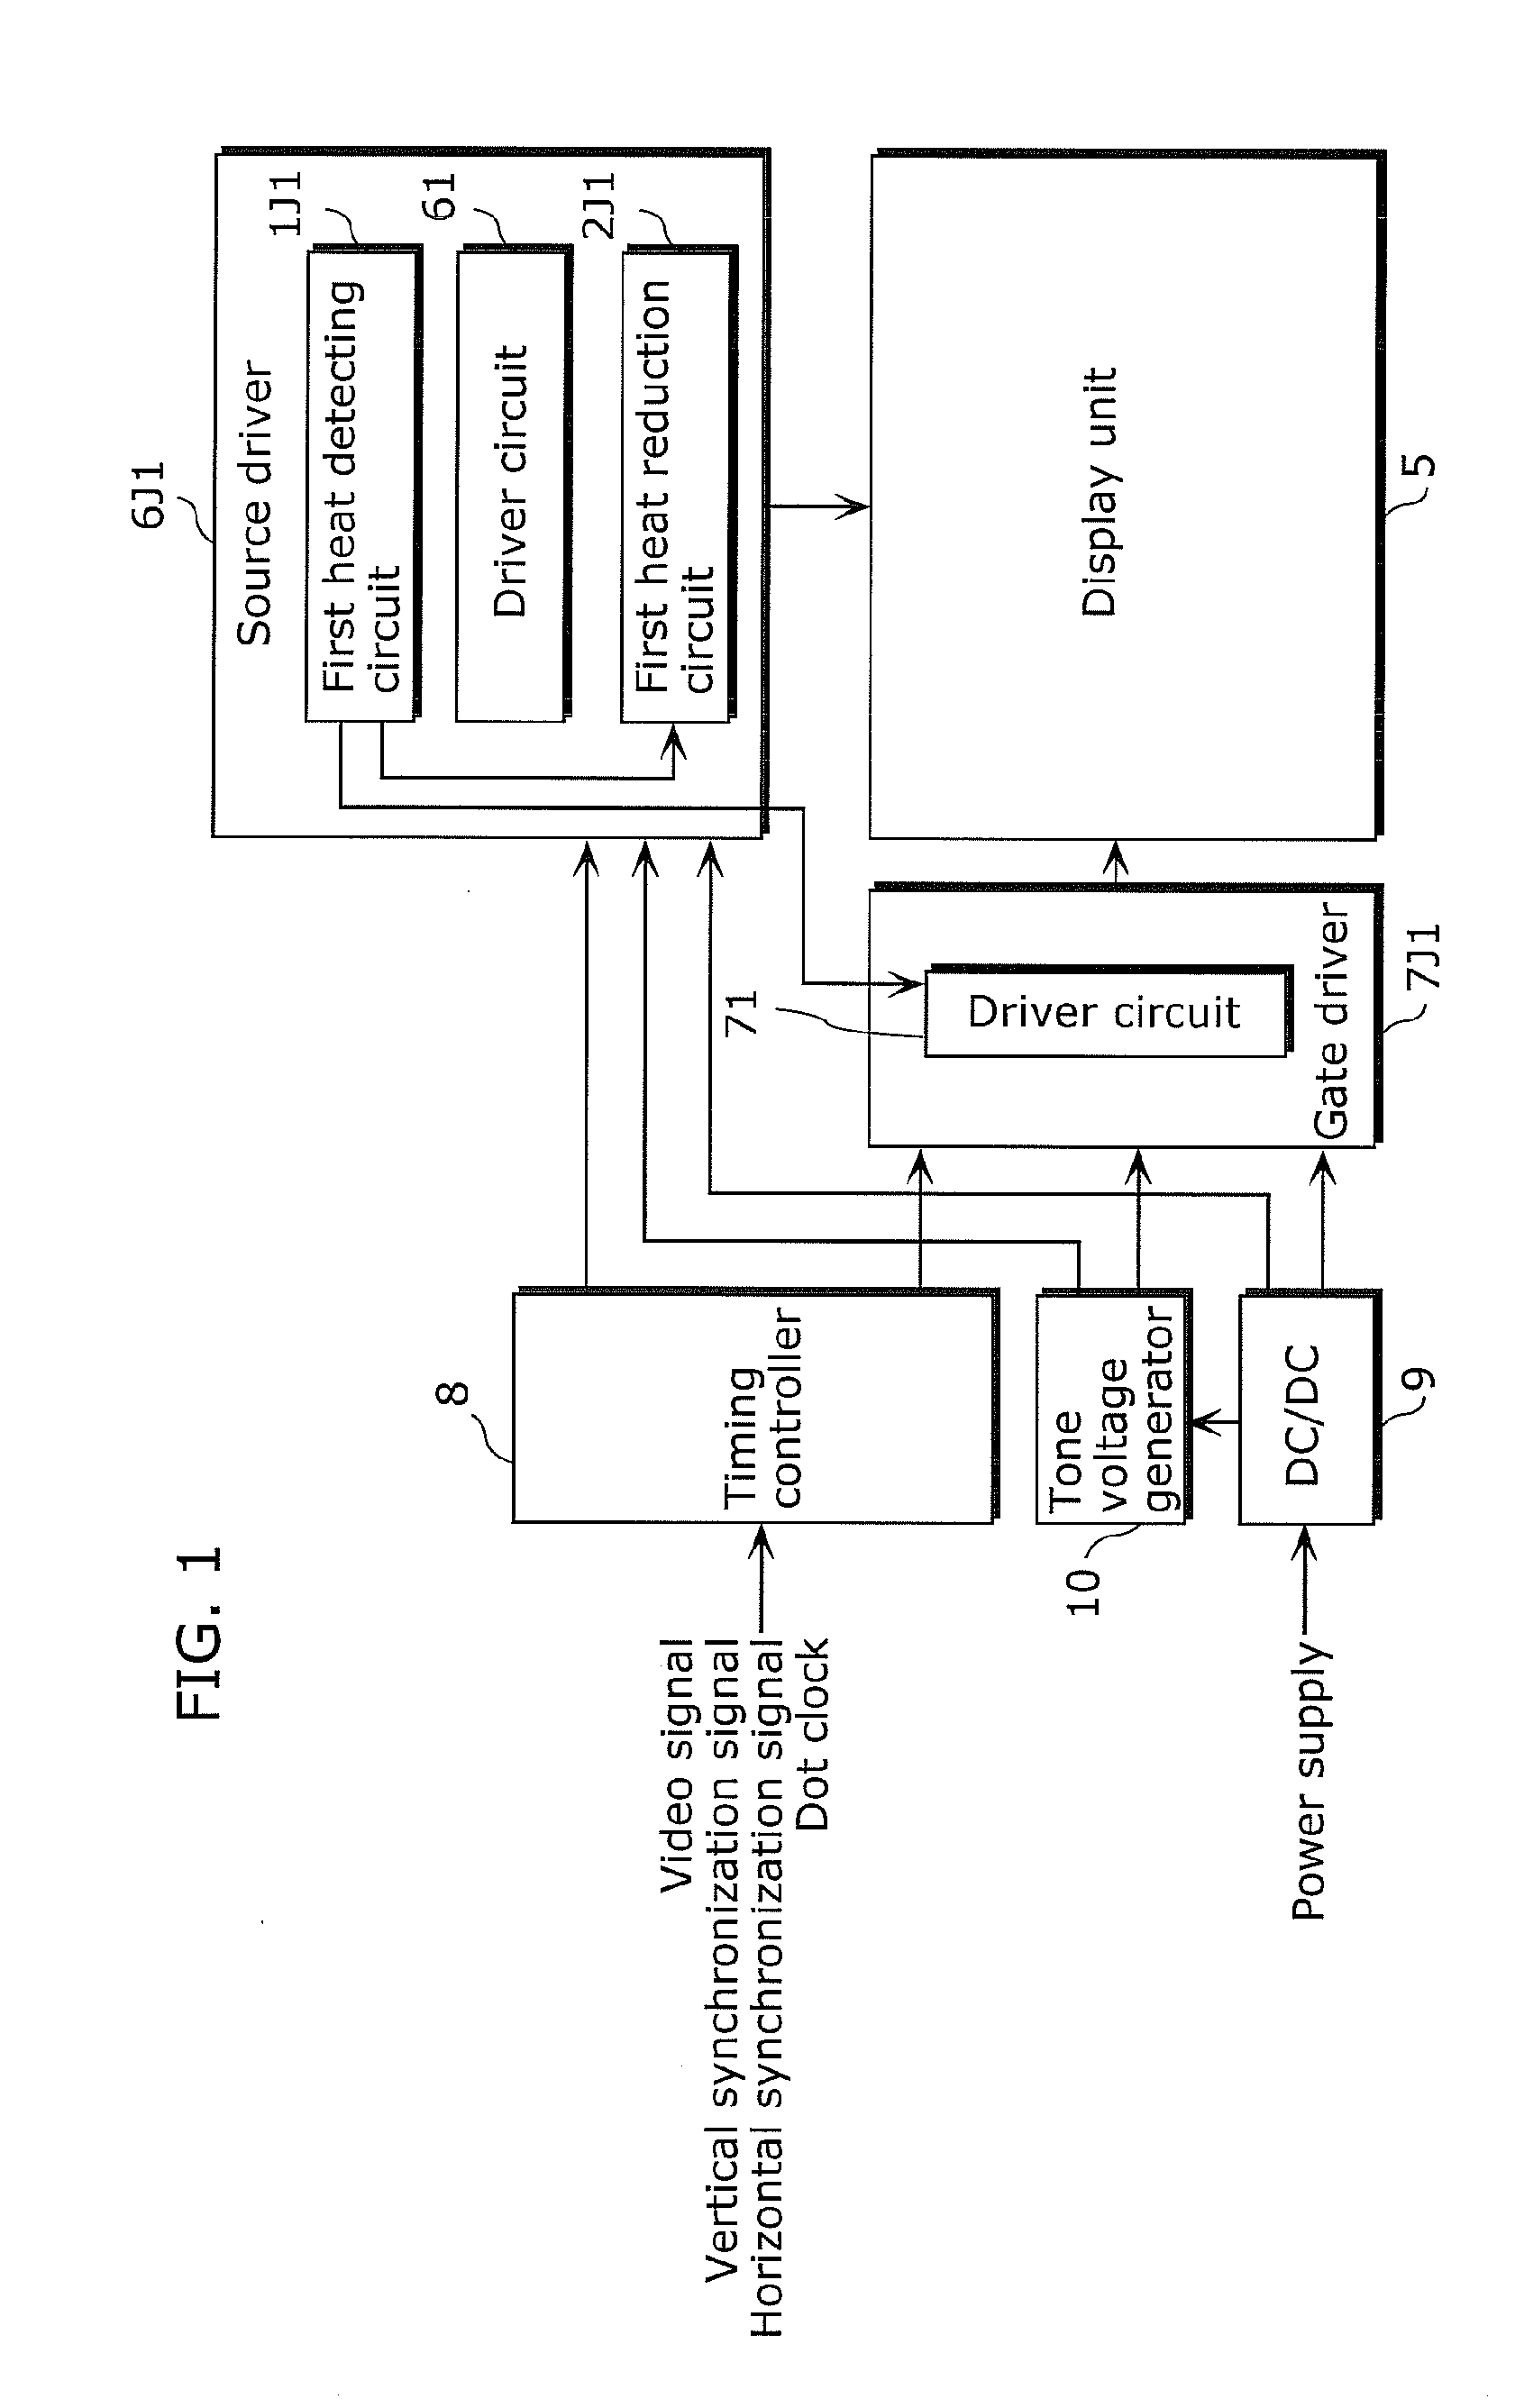 Display apparatus driving circuit and method of driving display apparatus